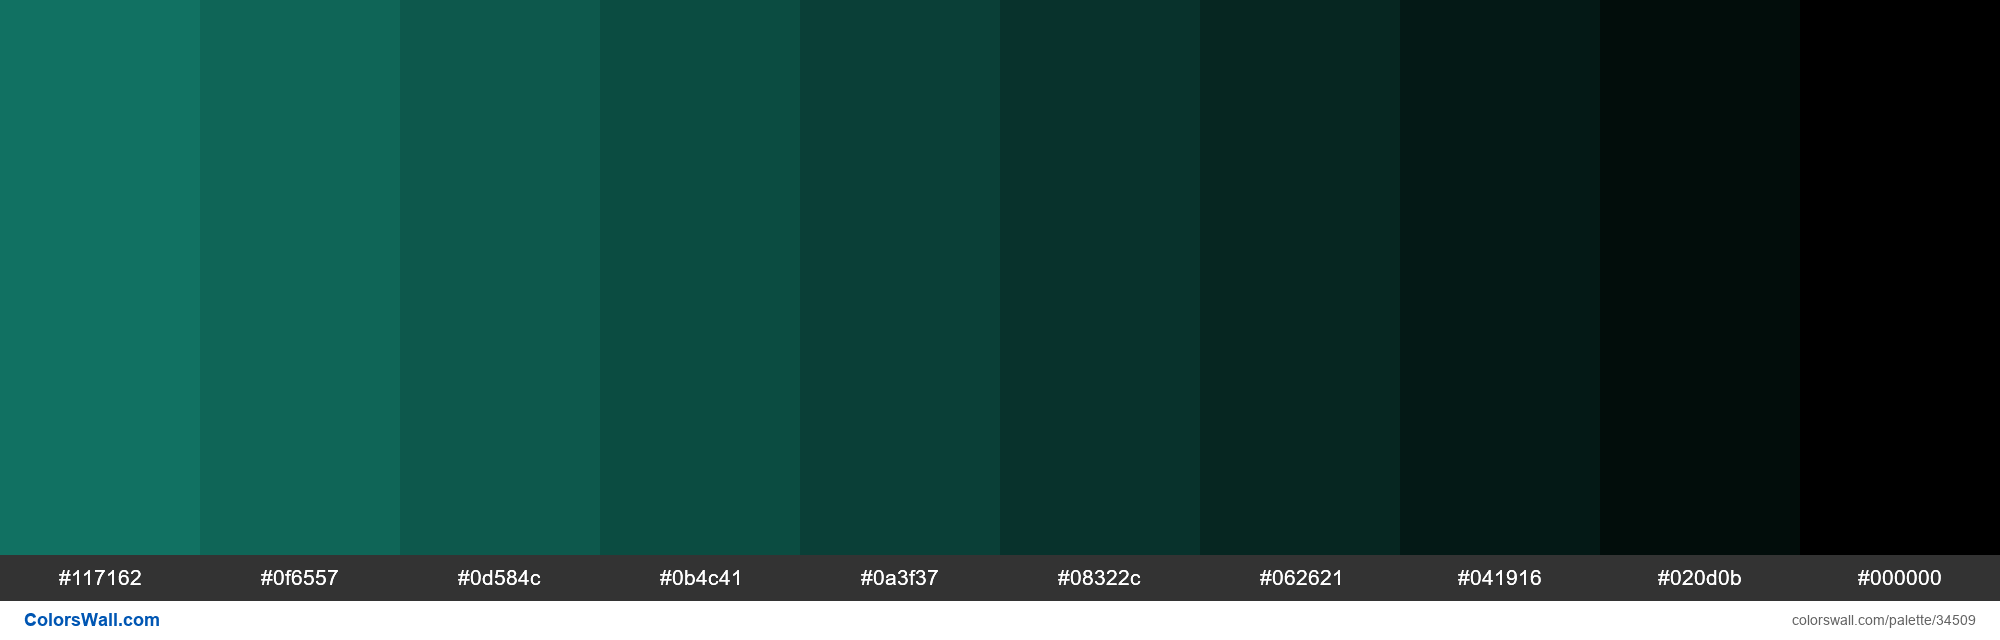 colorswall on X: Shades XKCD Color dark plum #3f012c hex #390128, #320123,  #2c011f, #26011a, #200116, #190012, #13000d, #0d0009, #060004, #000000  #colors #palette   / X